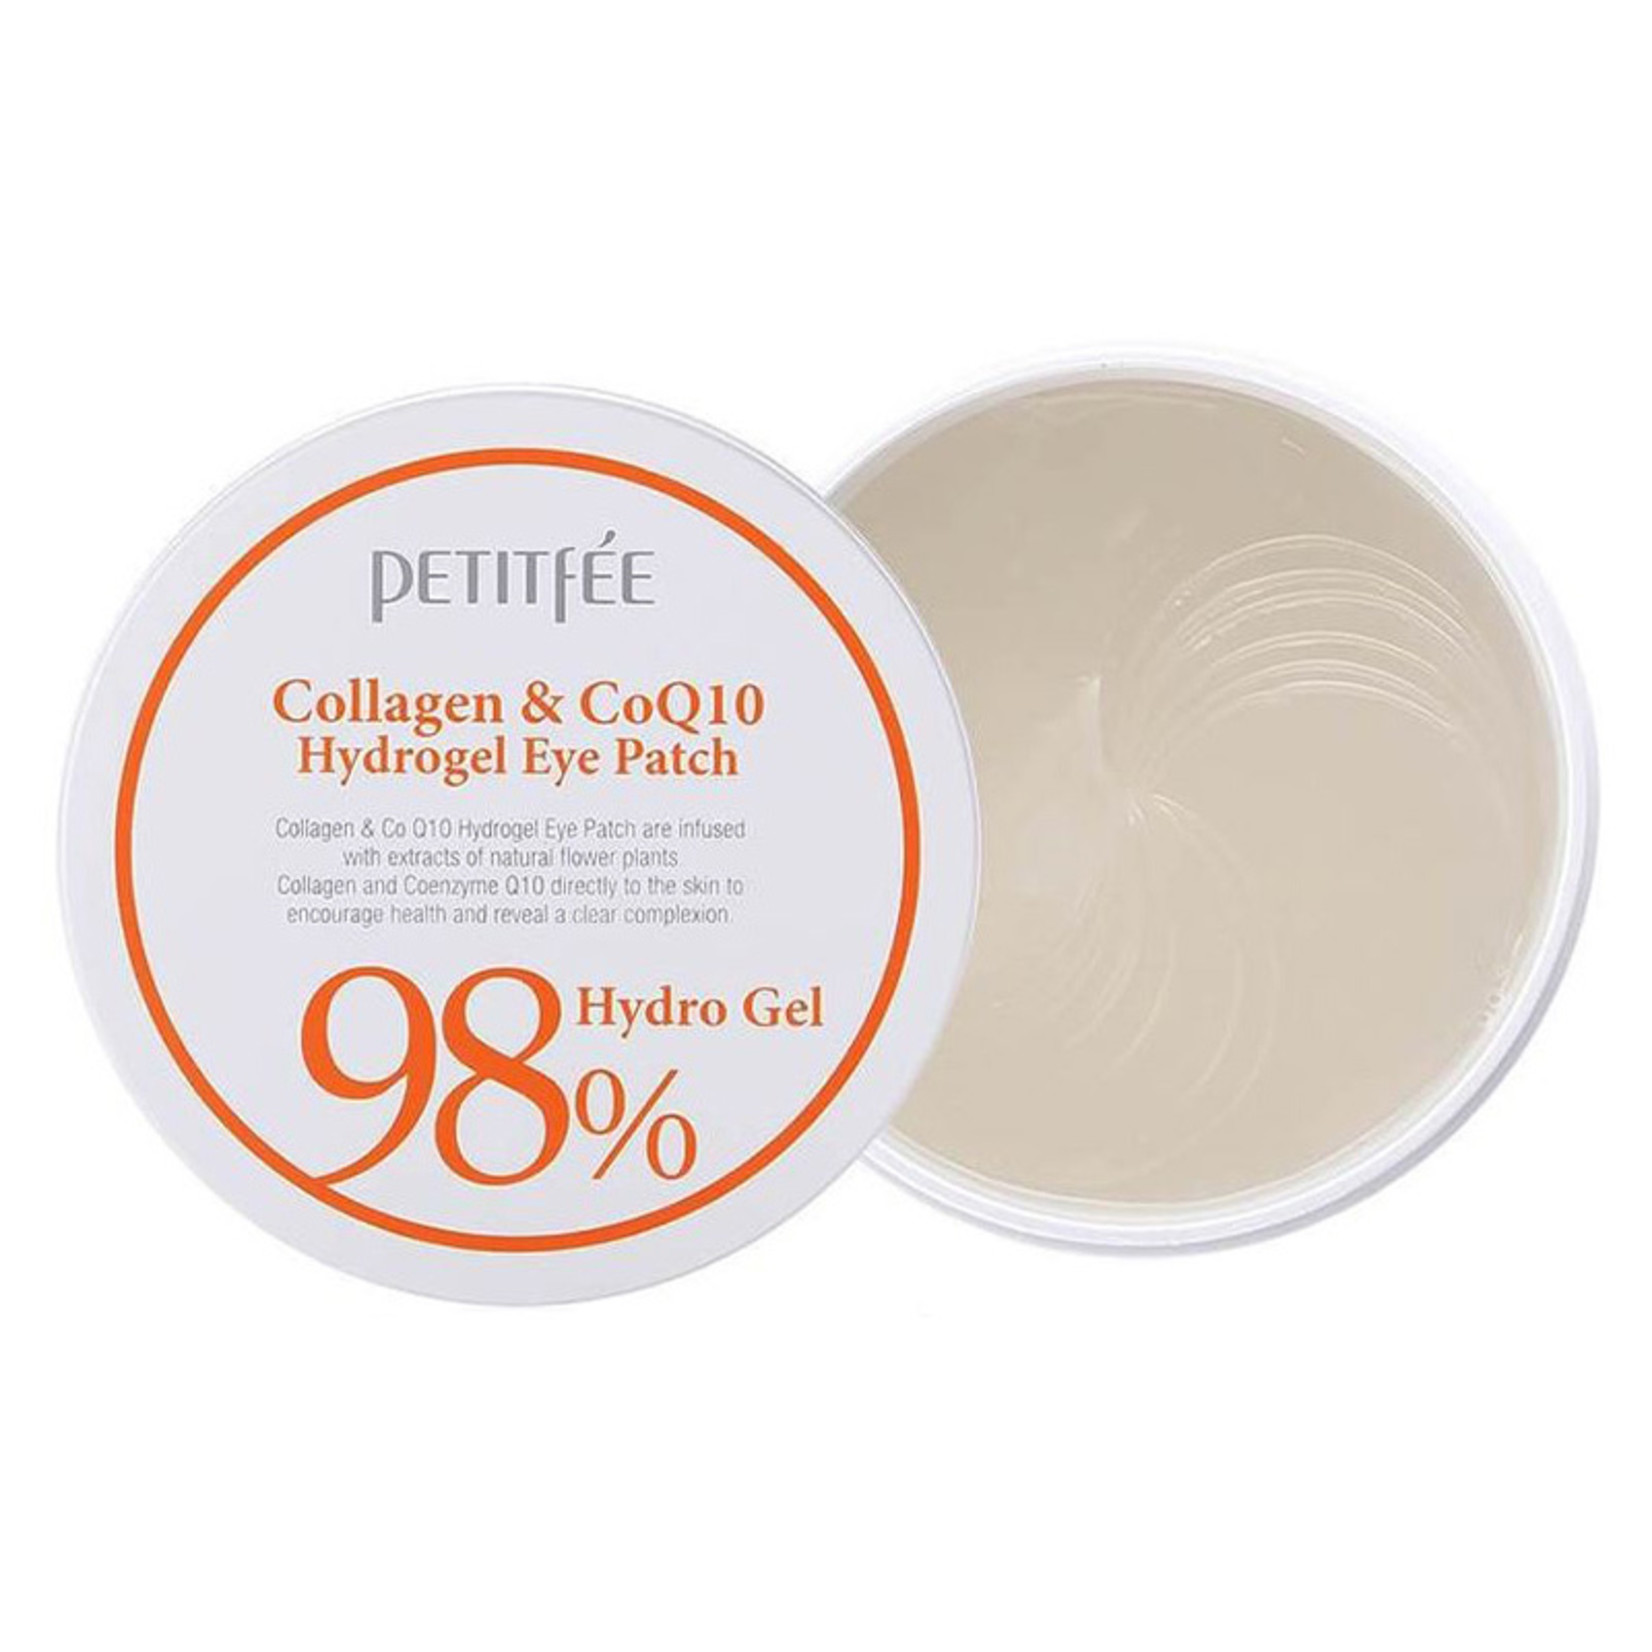 PETITFEE Collagen & CoQ10 Hydrogel Eye Patch